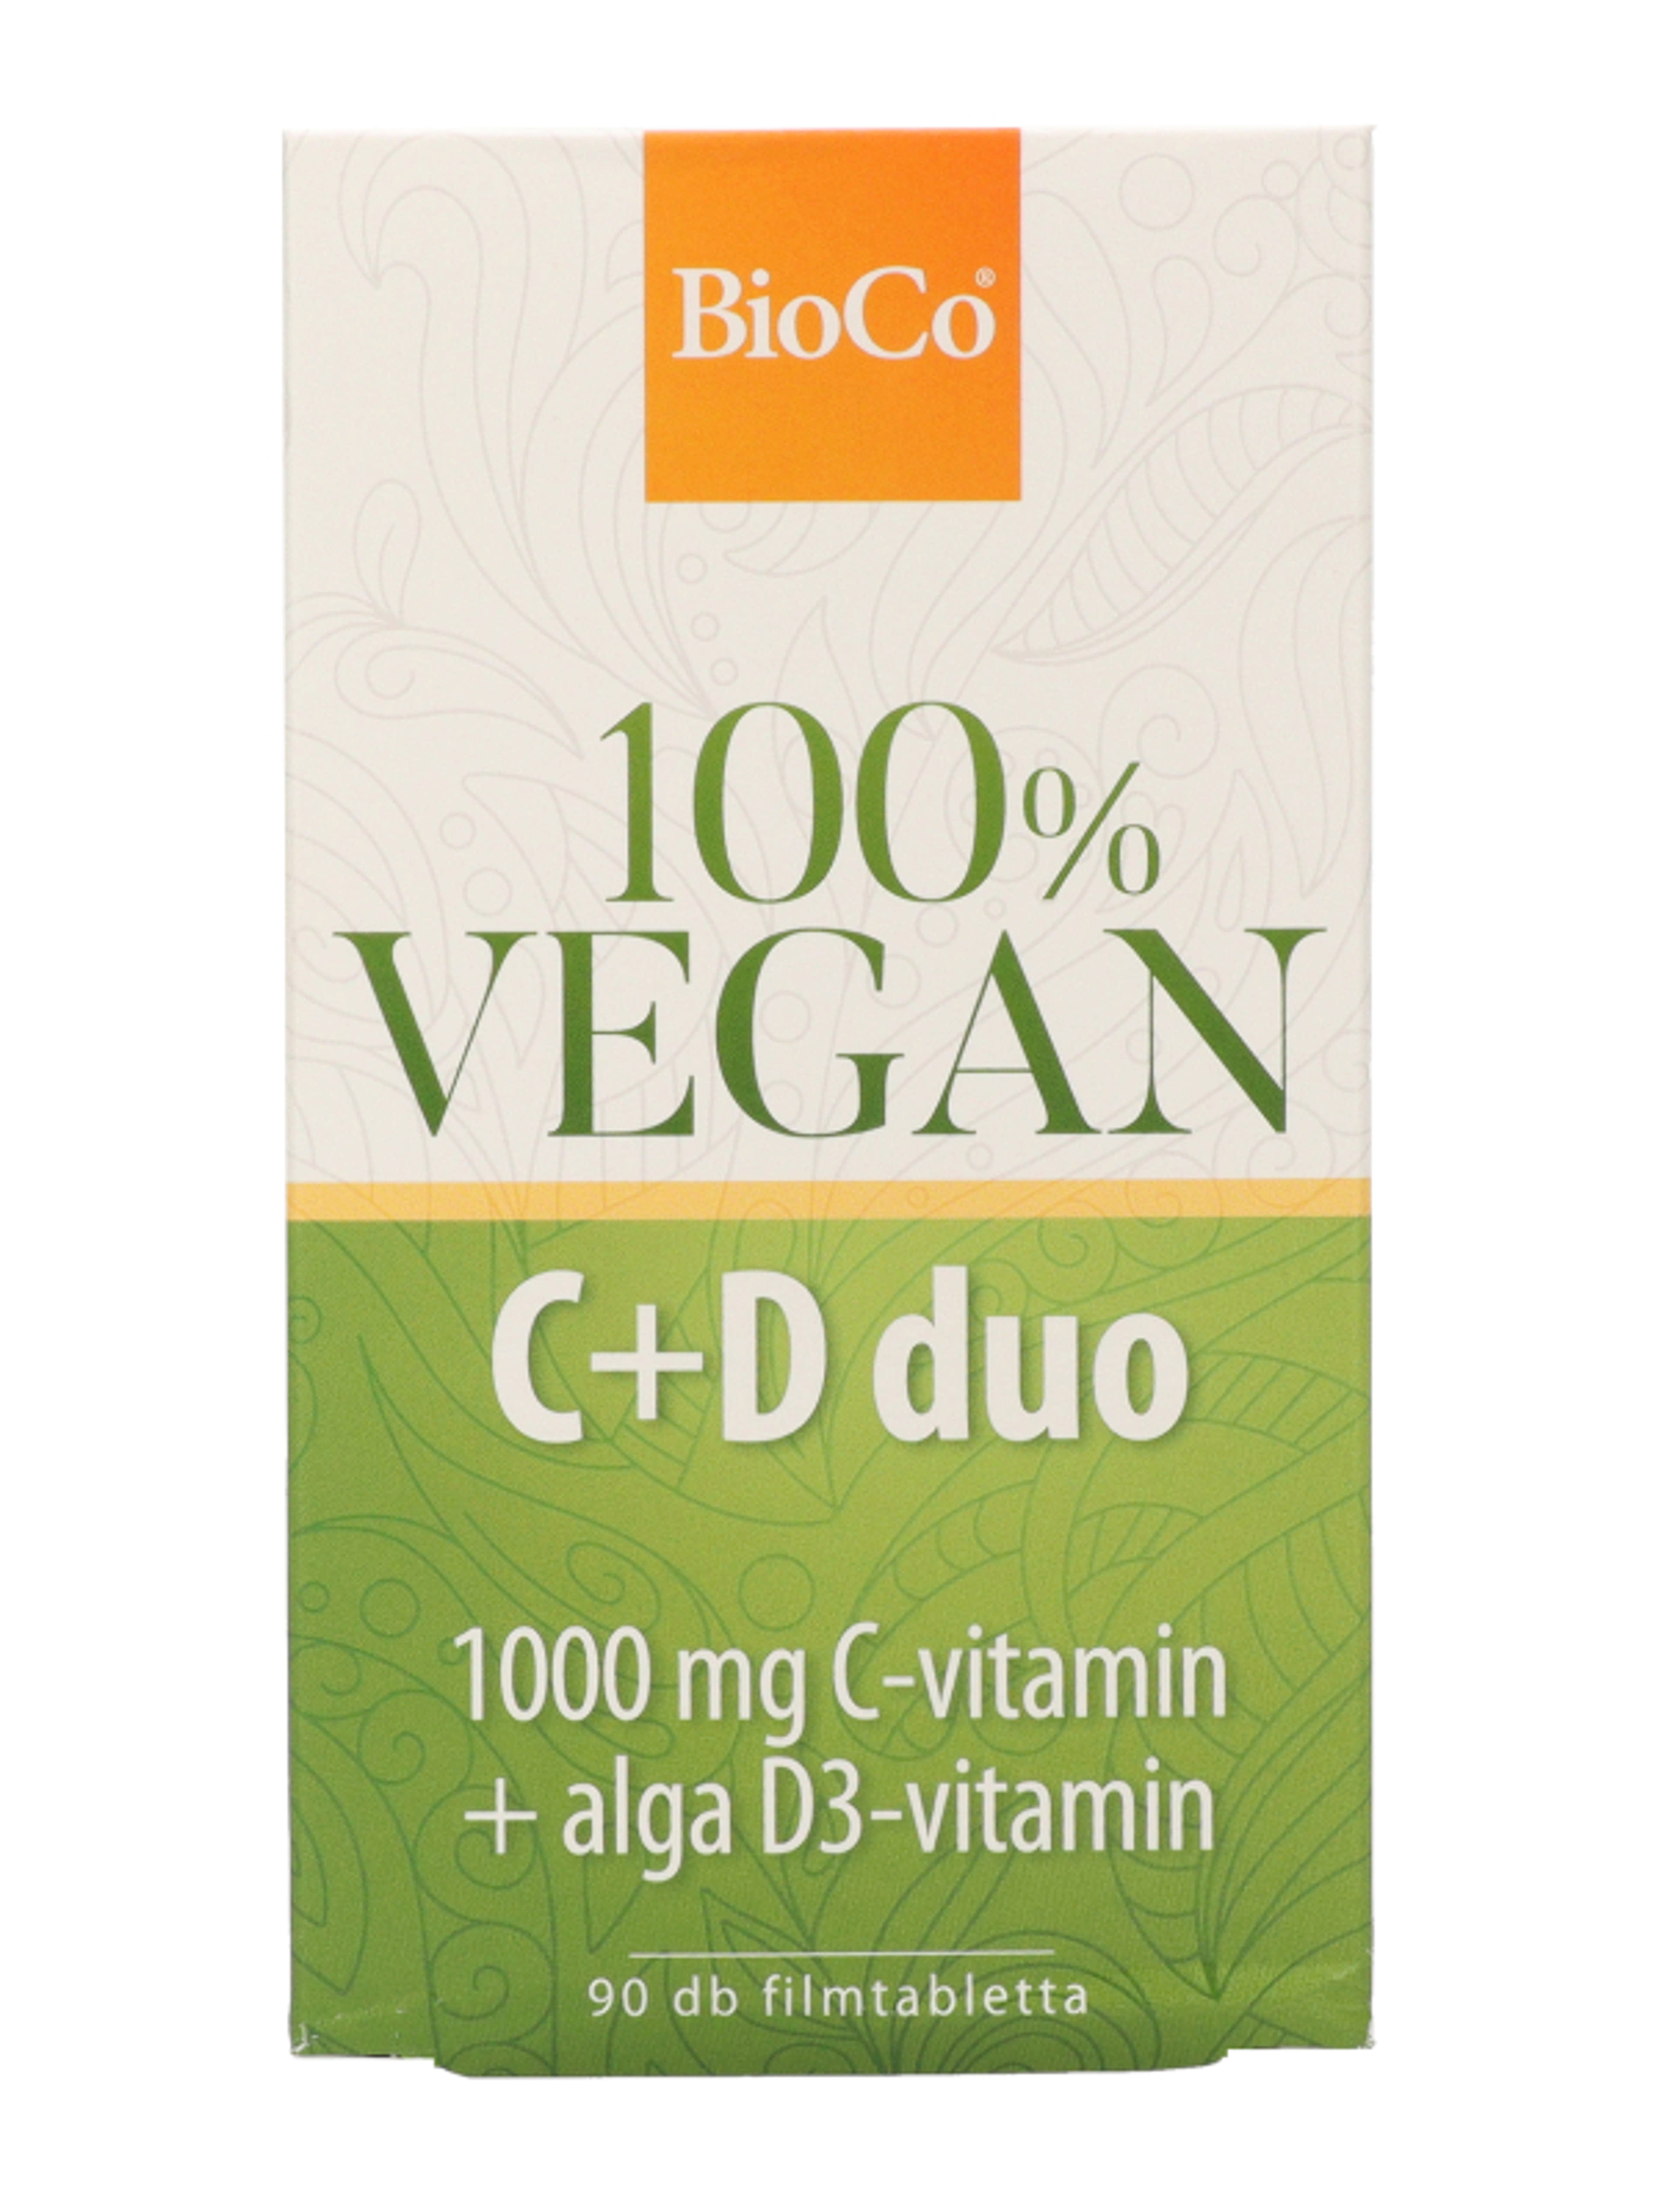 Bioco vegán C+D duo filmtabletta - 90 db-3